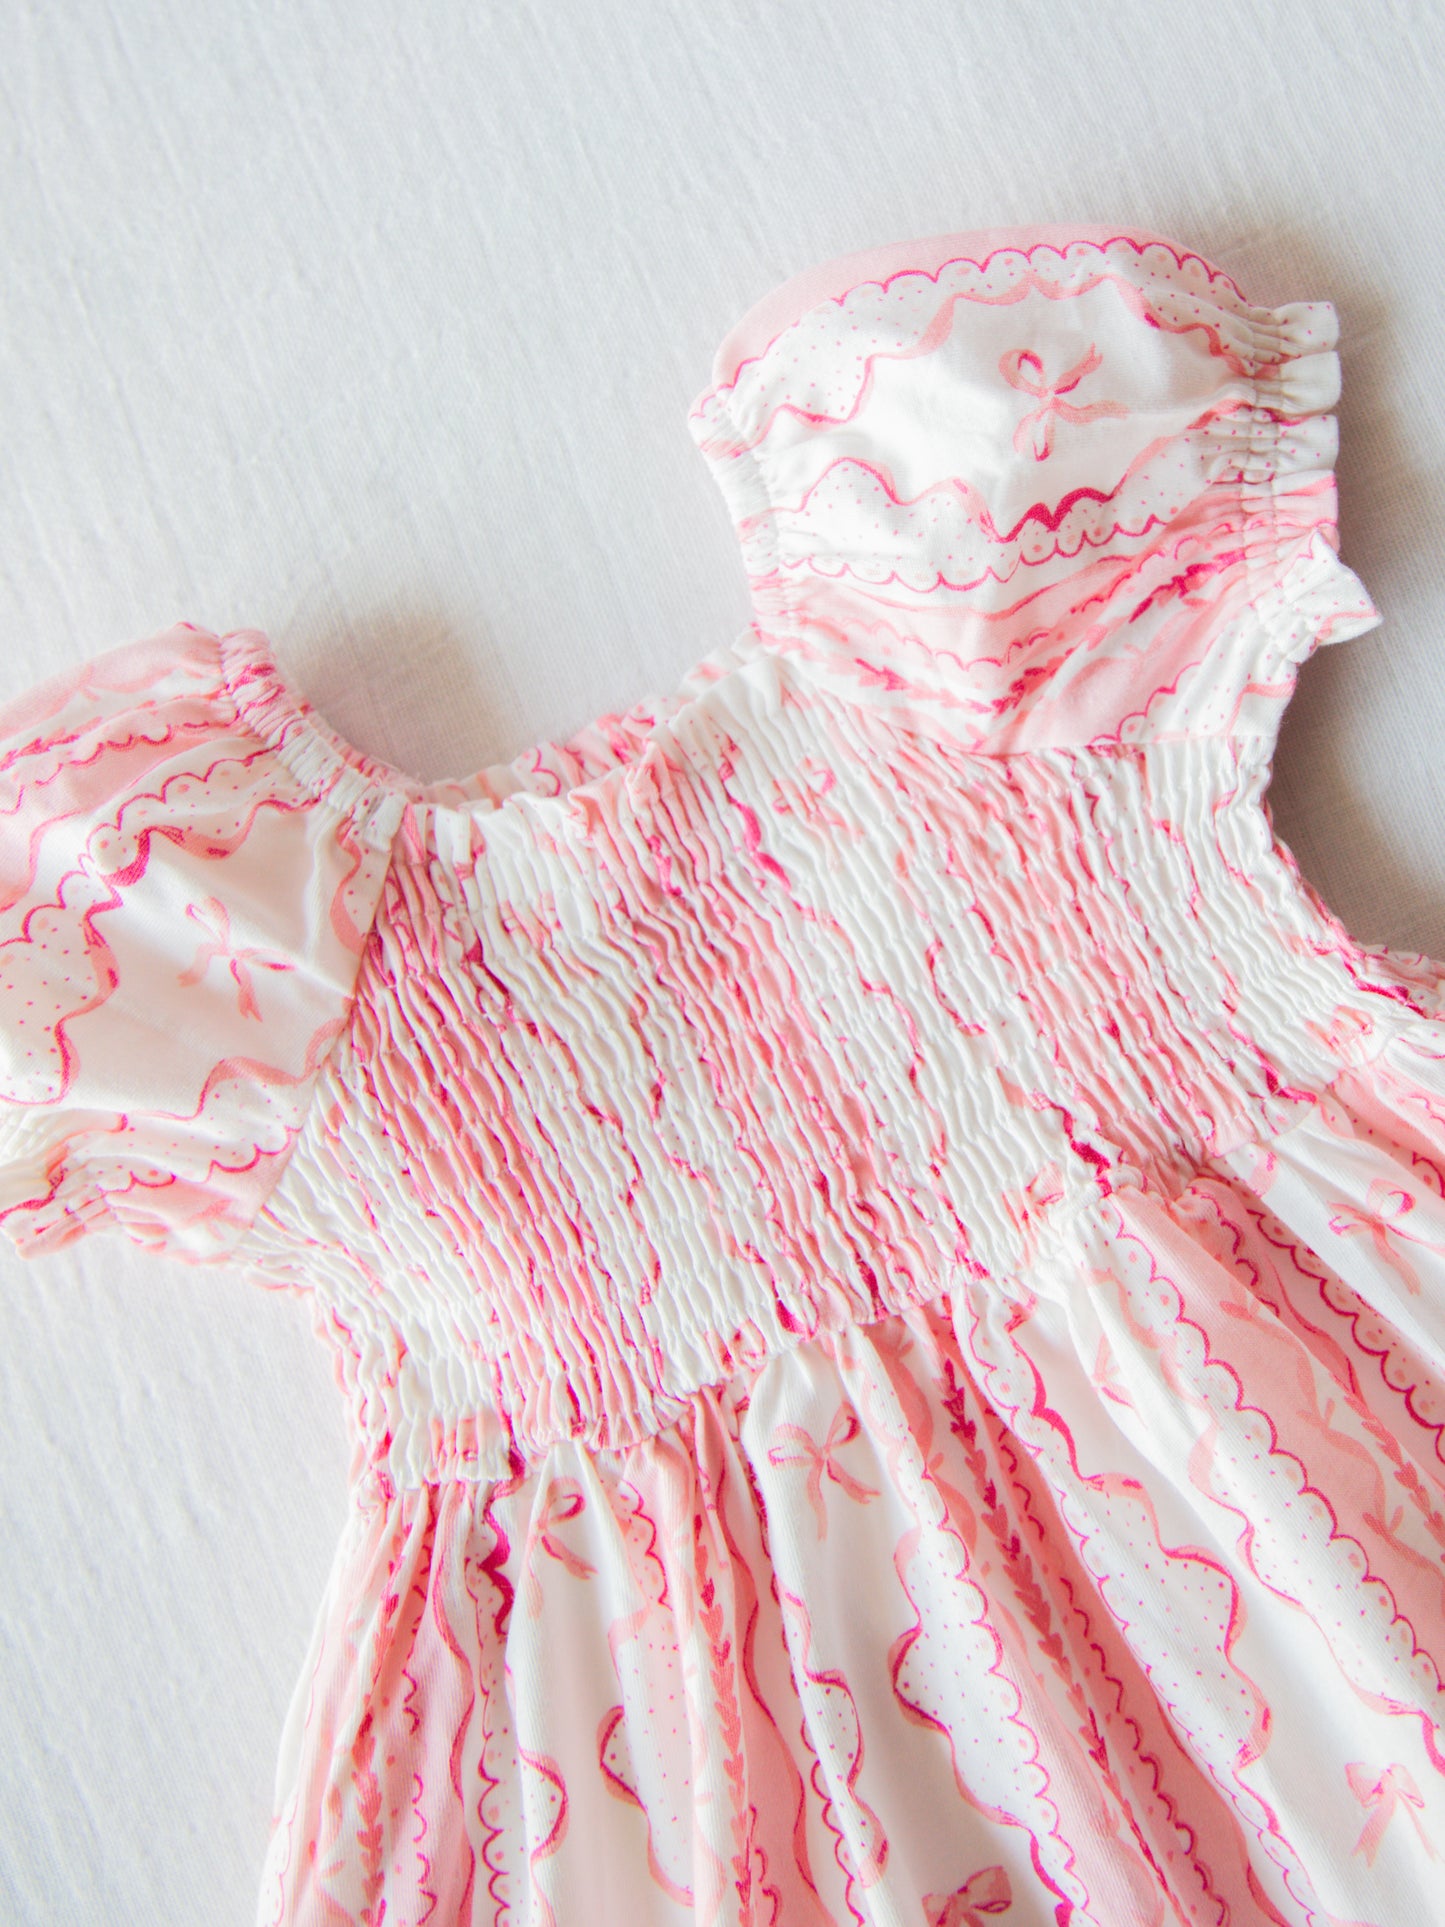 Puff Sleeve Dress - Pink Lace